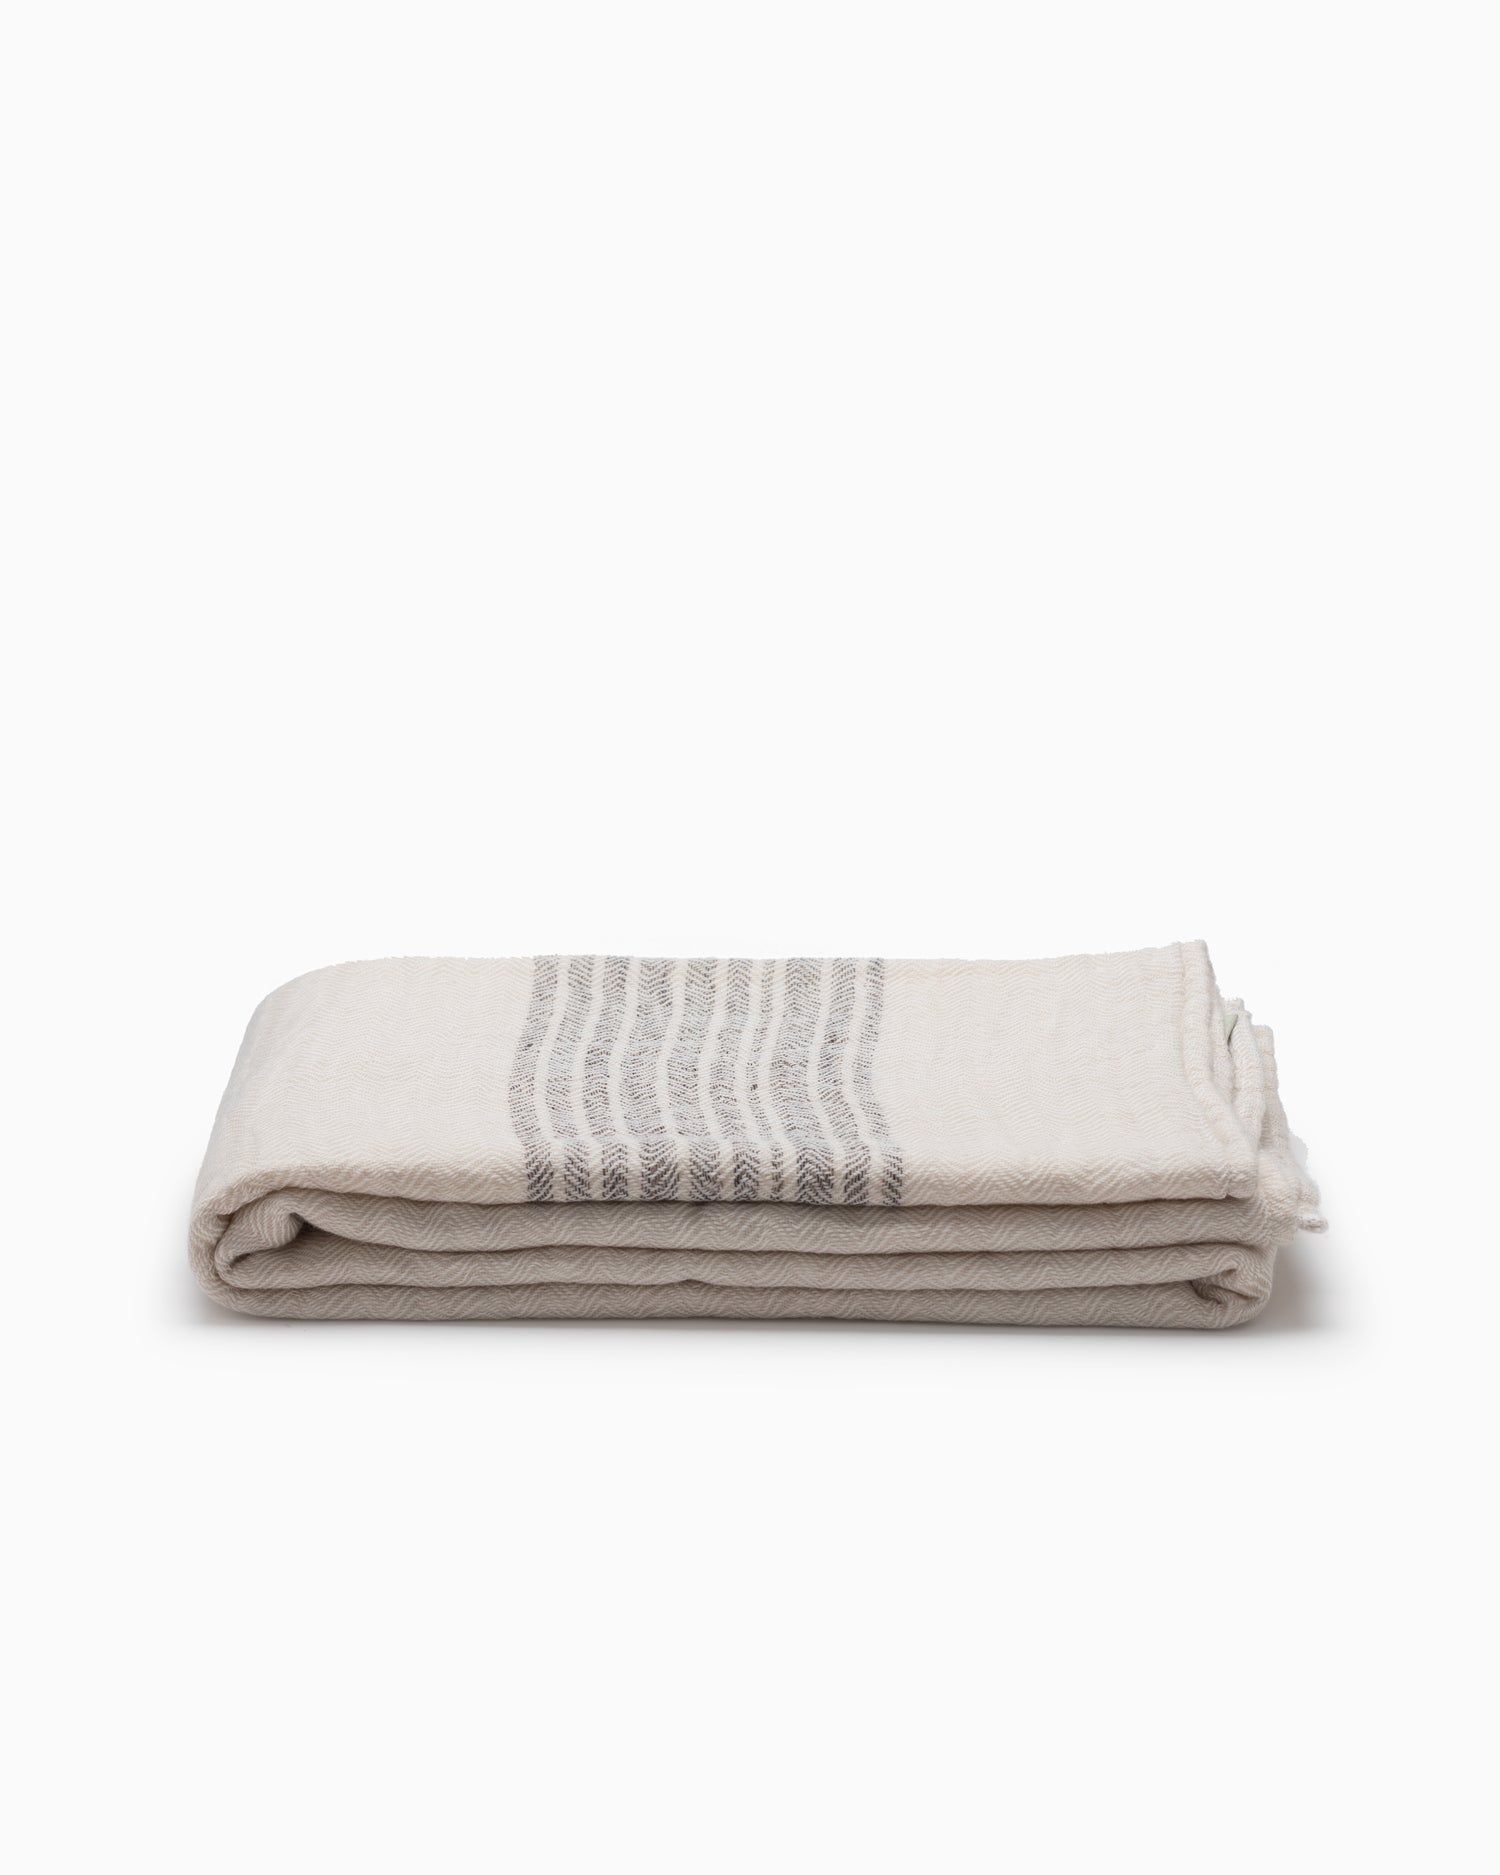 Flax Line Organic Compact Bath Towel - Beige